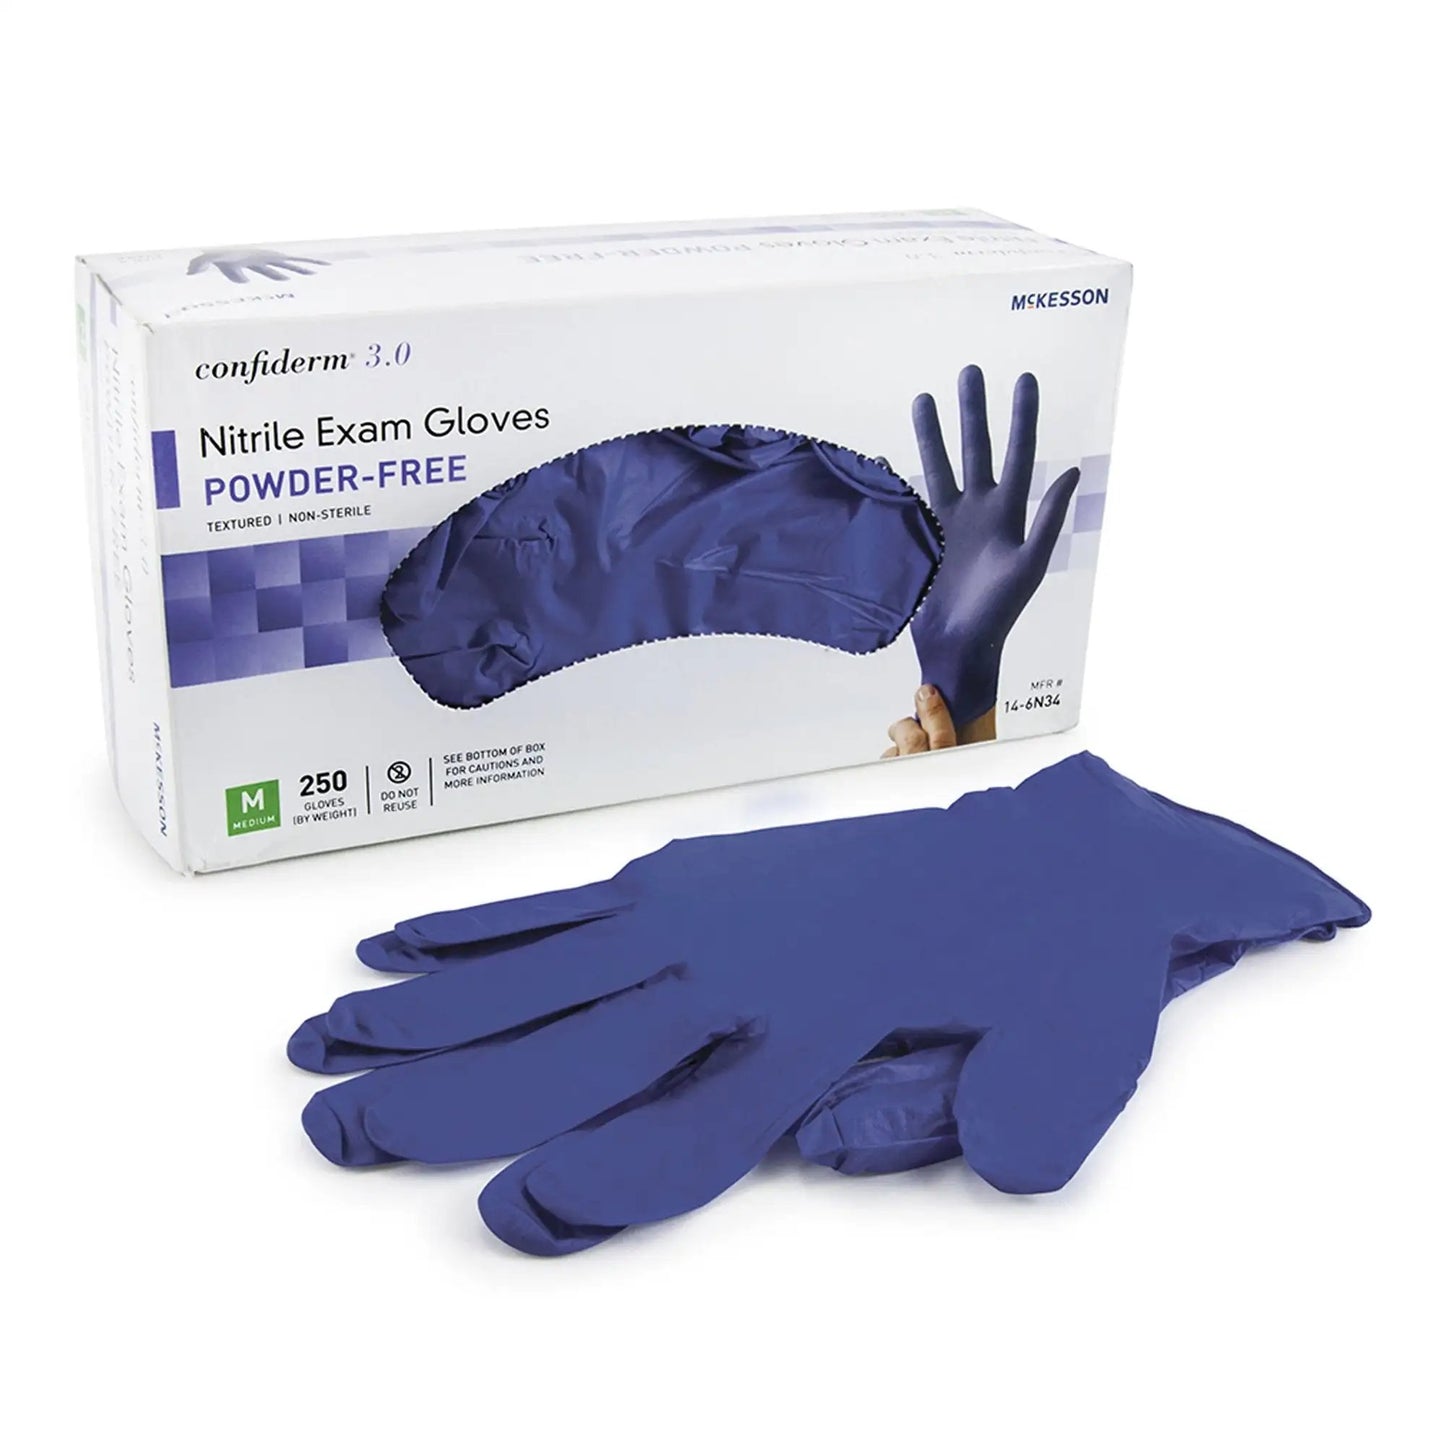 McKesson Confiderm 3.0 Nitrile Gloves, Medium, Blue